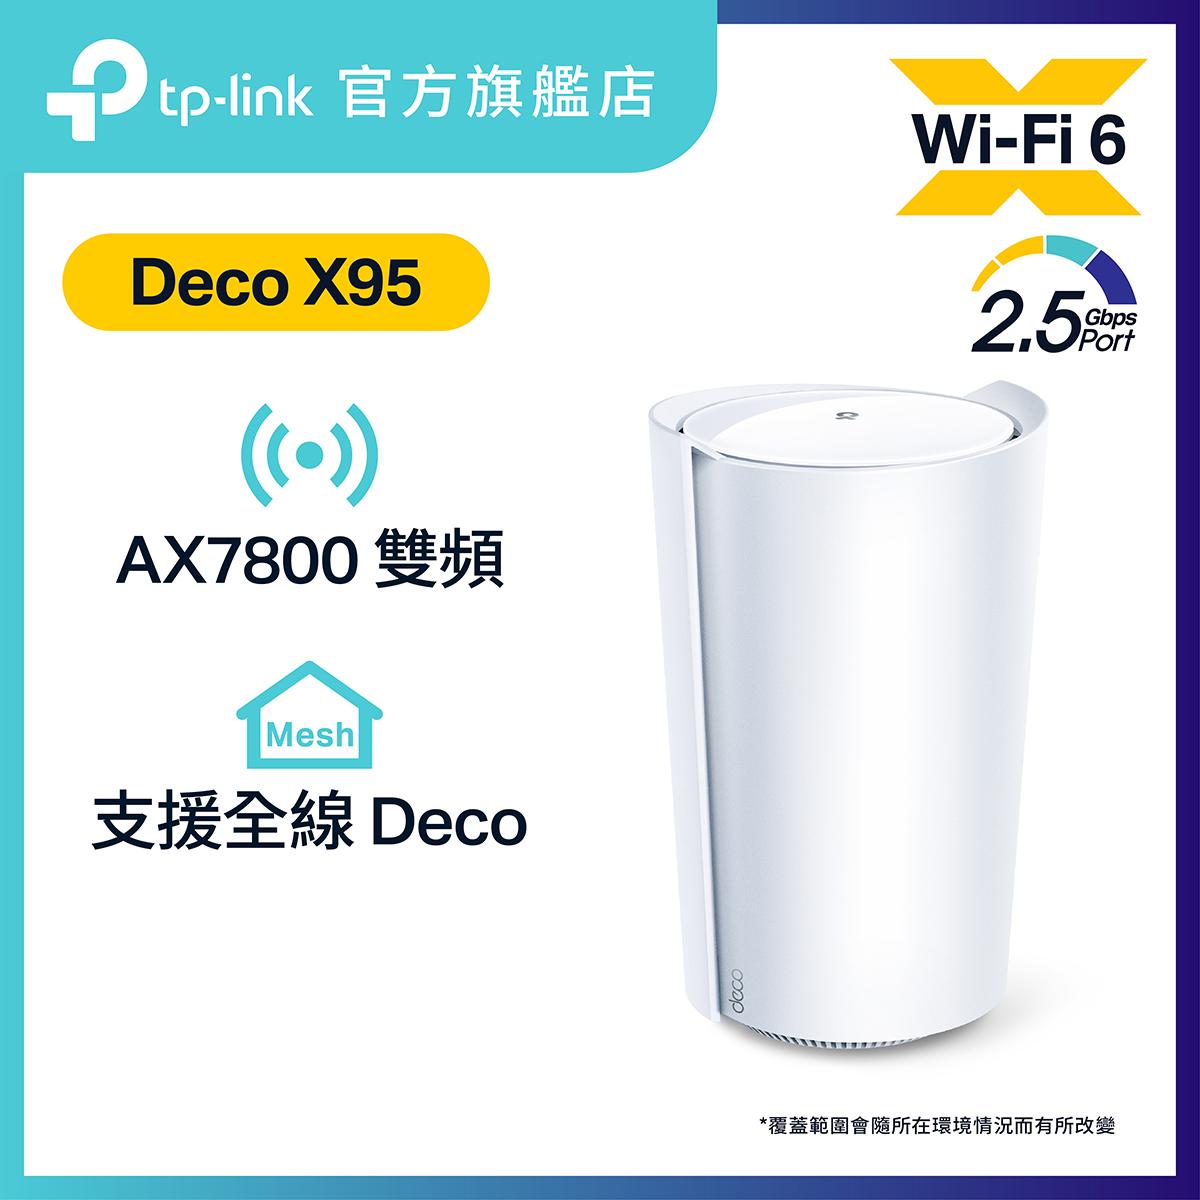 Deco X95 AX7800 完整家庭 Mesh WiFi 6 系統